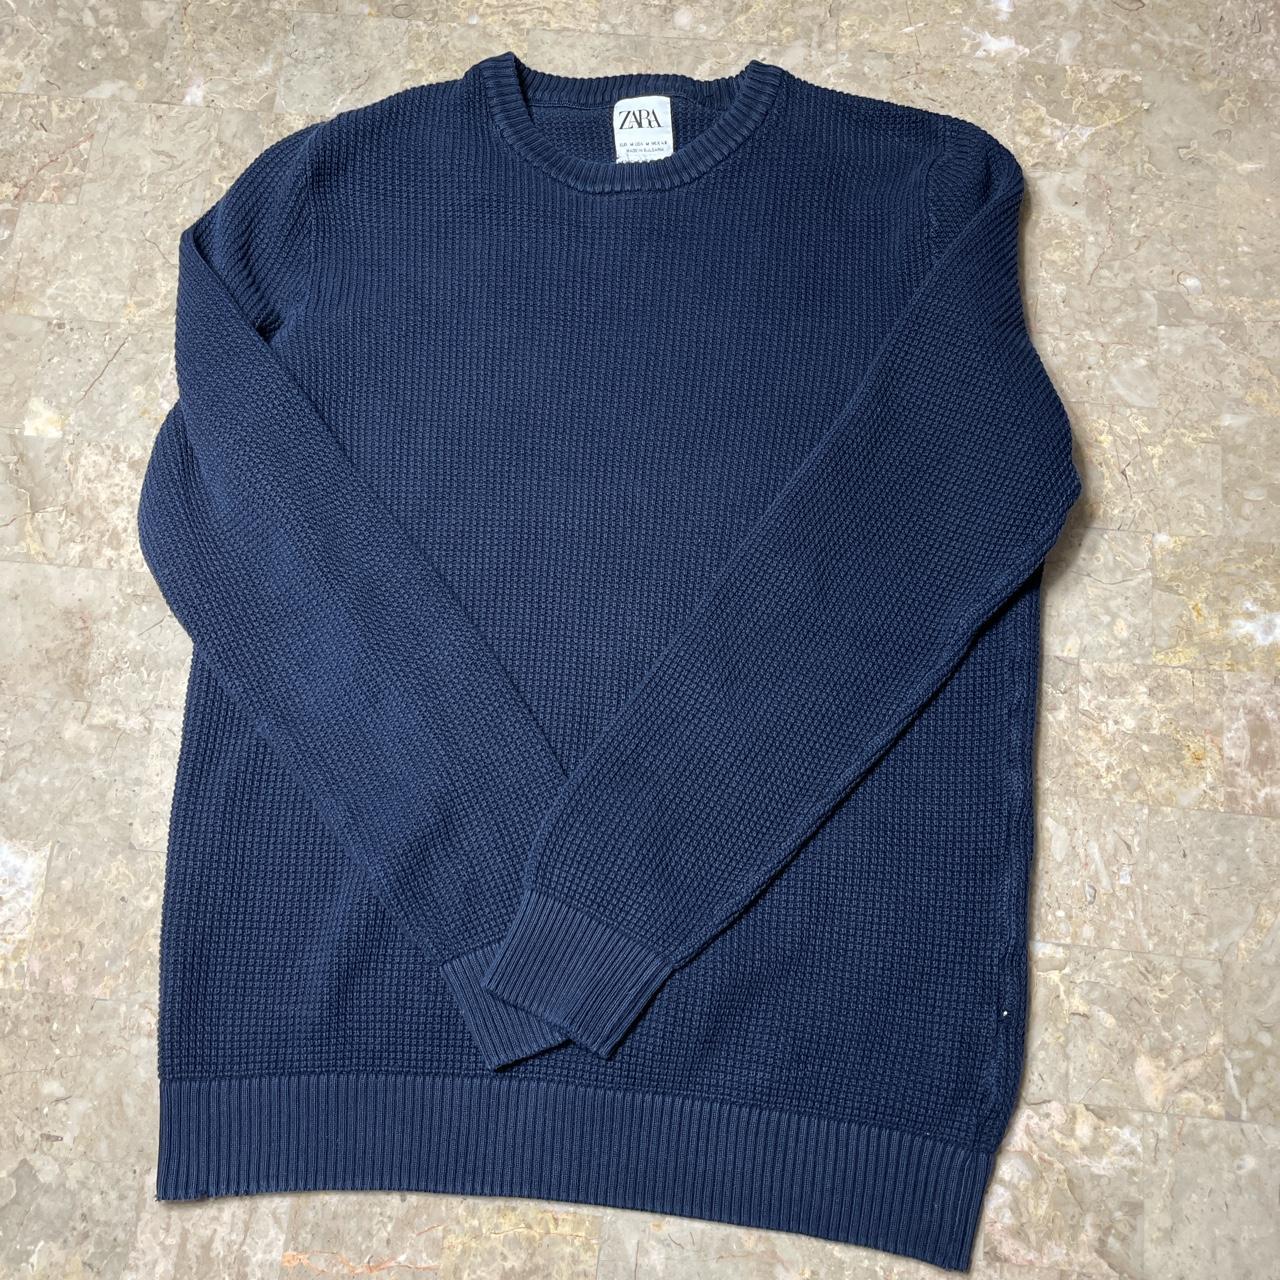 zara blue knit sweater size m but best fits a small - Depop